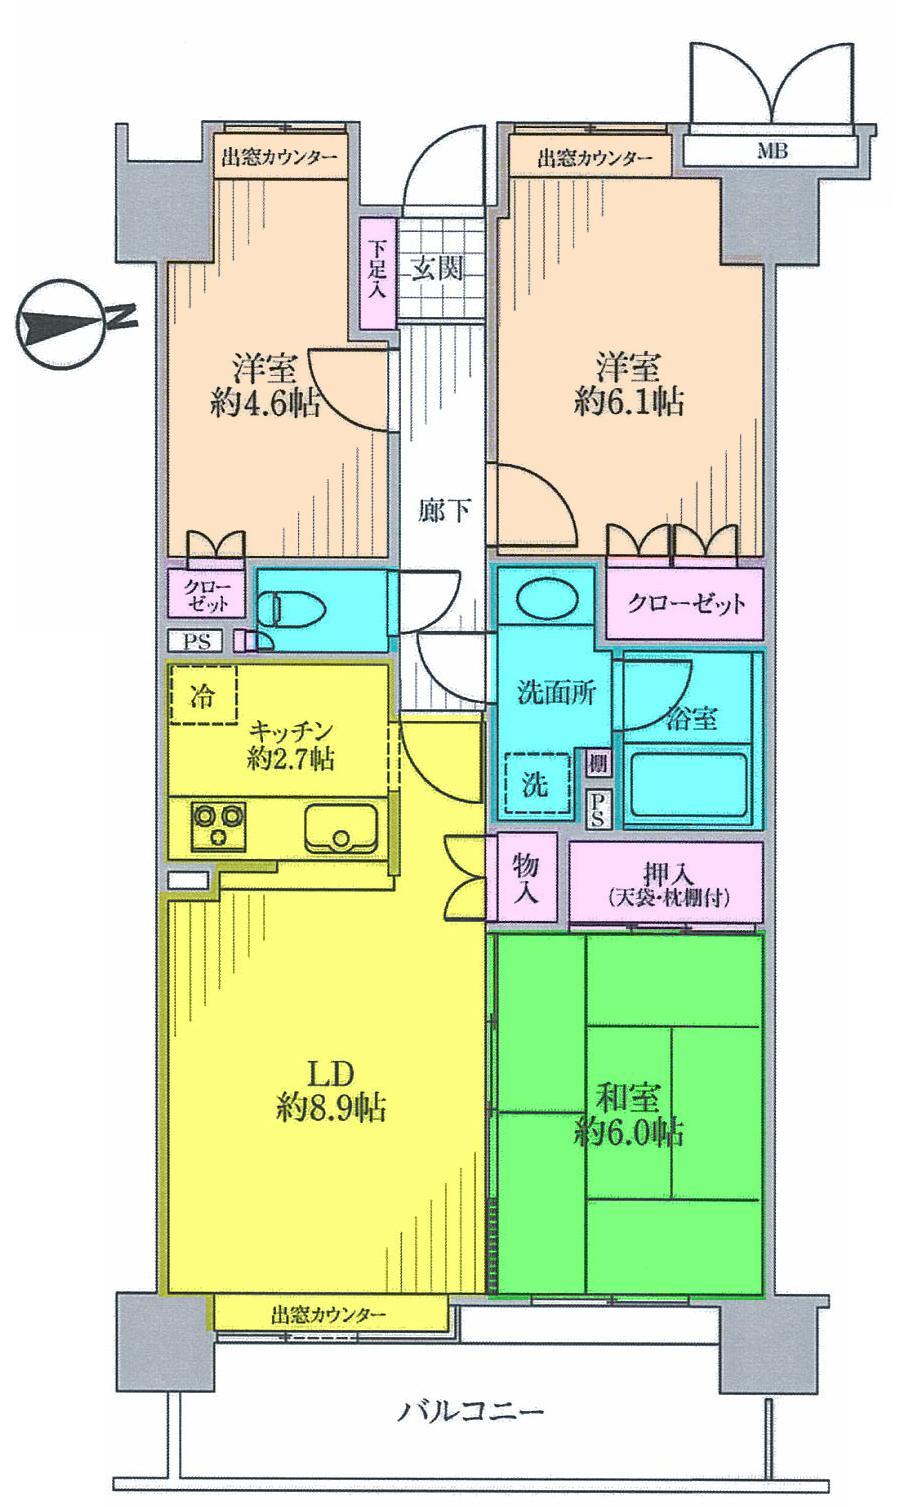 Floor plan. 3LDK, Price 20,980,000 yen, Occupied area 65.02 sq m , Balcony area 10.62 sq m daylighting ・ View of nice room